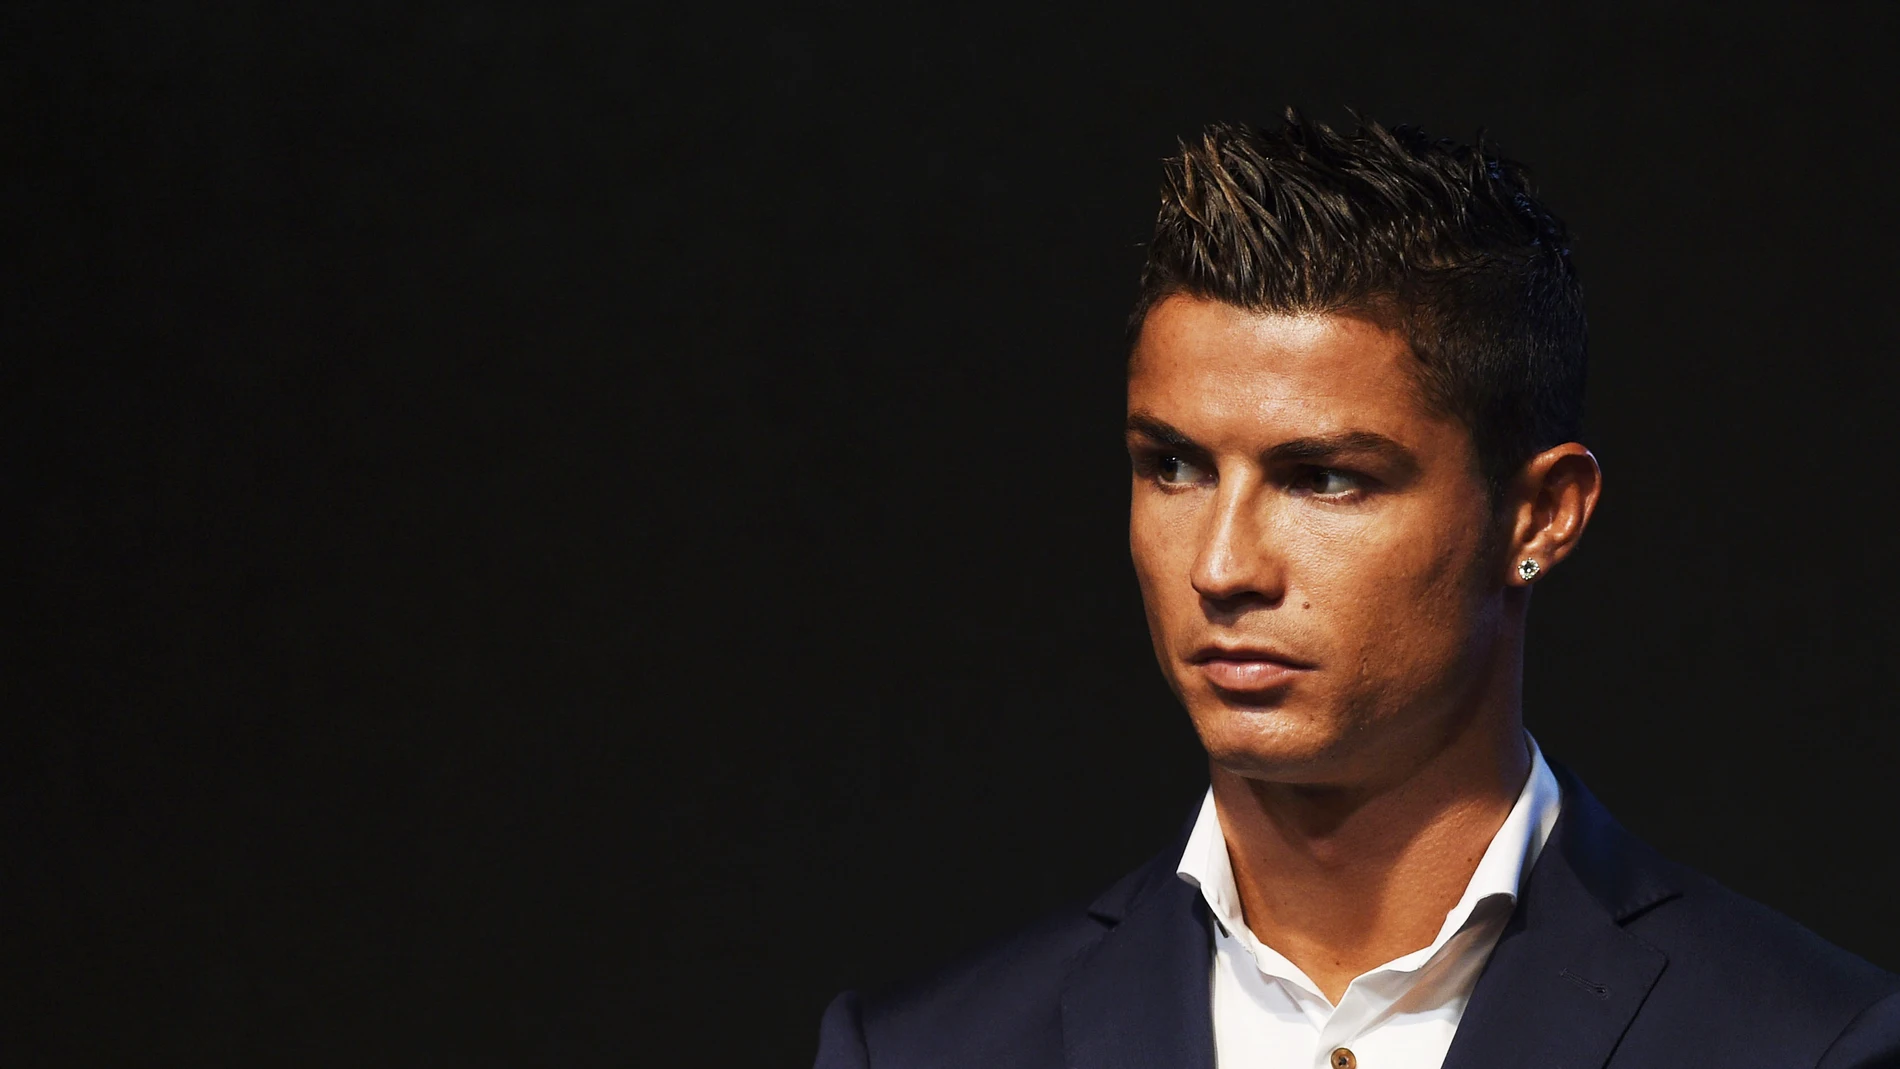 Cristiano Ronaldo, en actitud pensativa